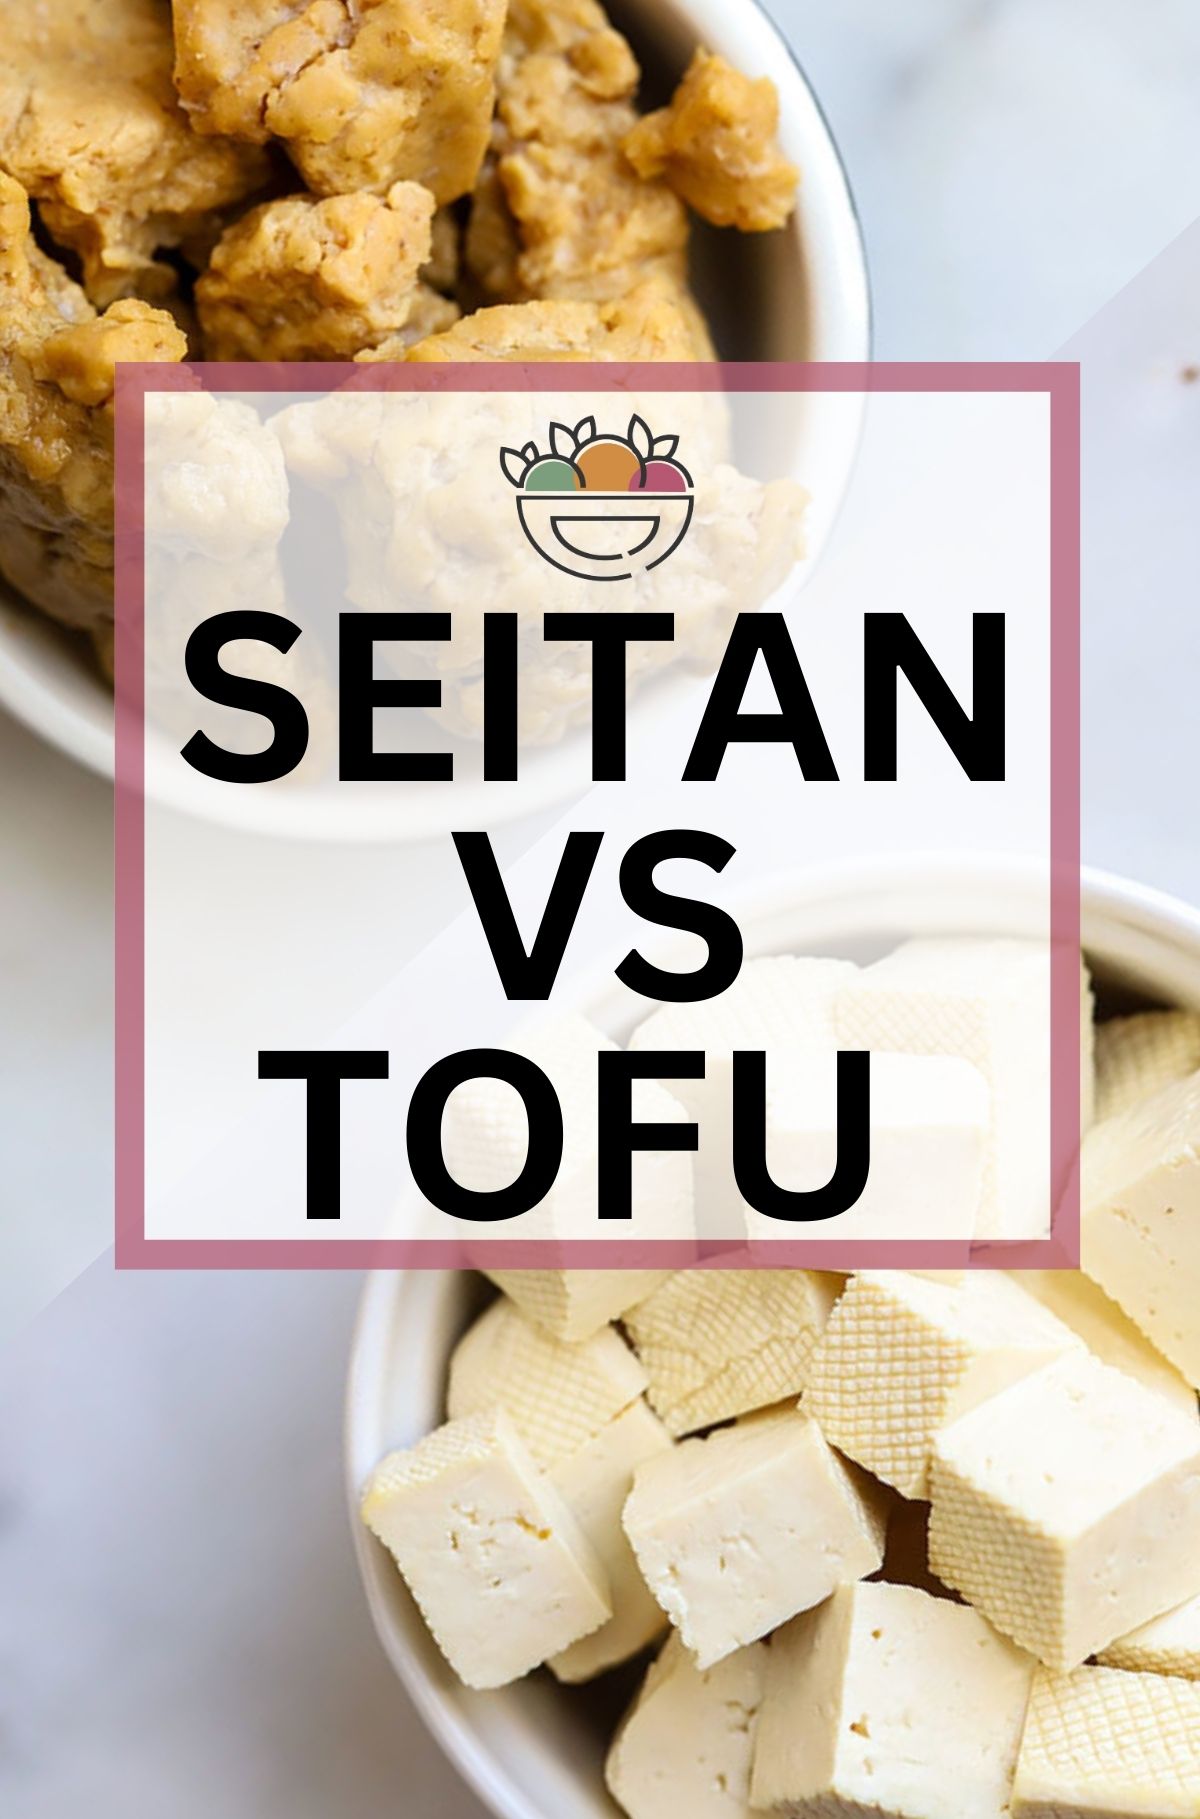 image with small bowls of seitan and tofu with text overlay that says seitan vs tofu. 